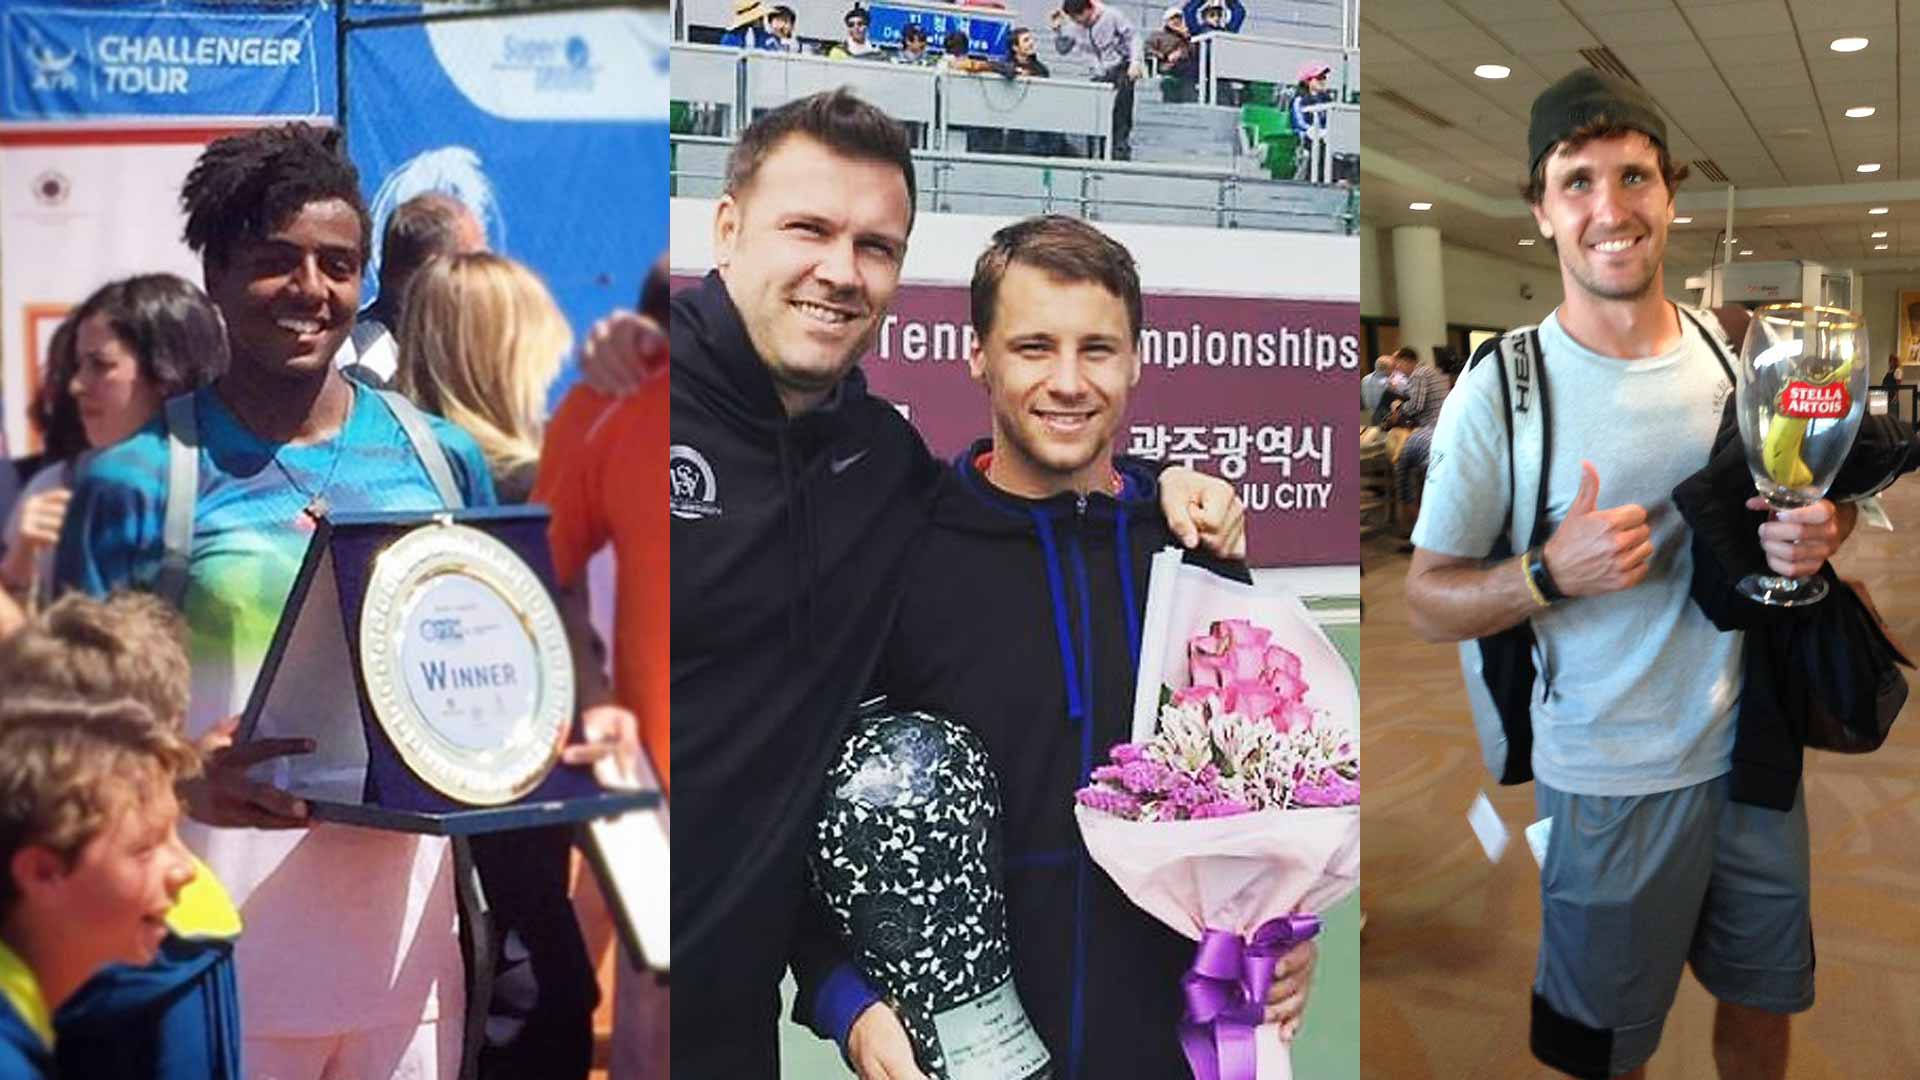 Elias Ymer, Ricardas Berankis and Mischa Zverev all captured titles this week on the ATP Challenger Tour. 